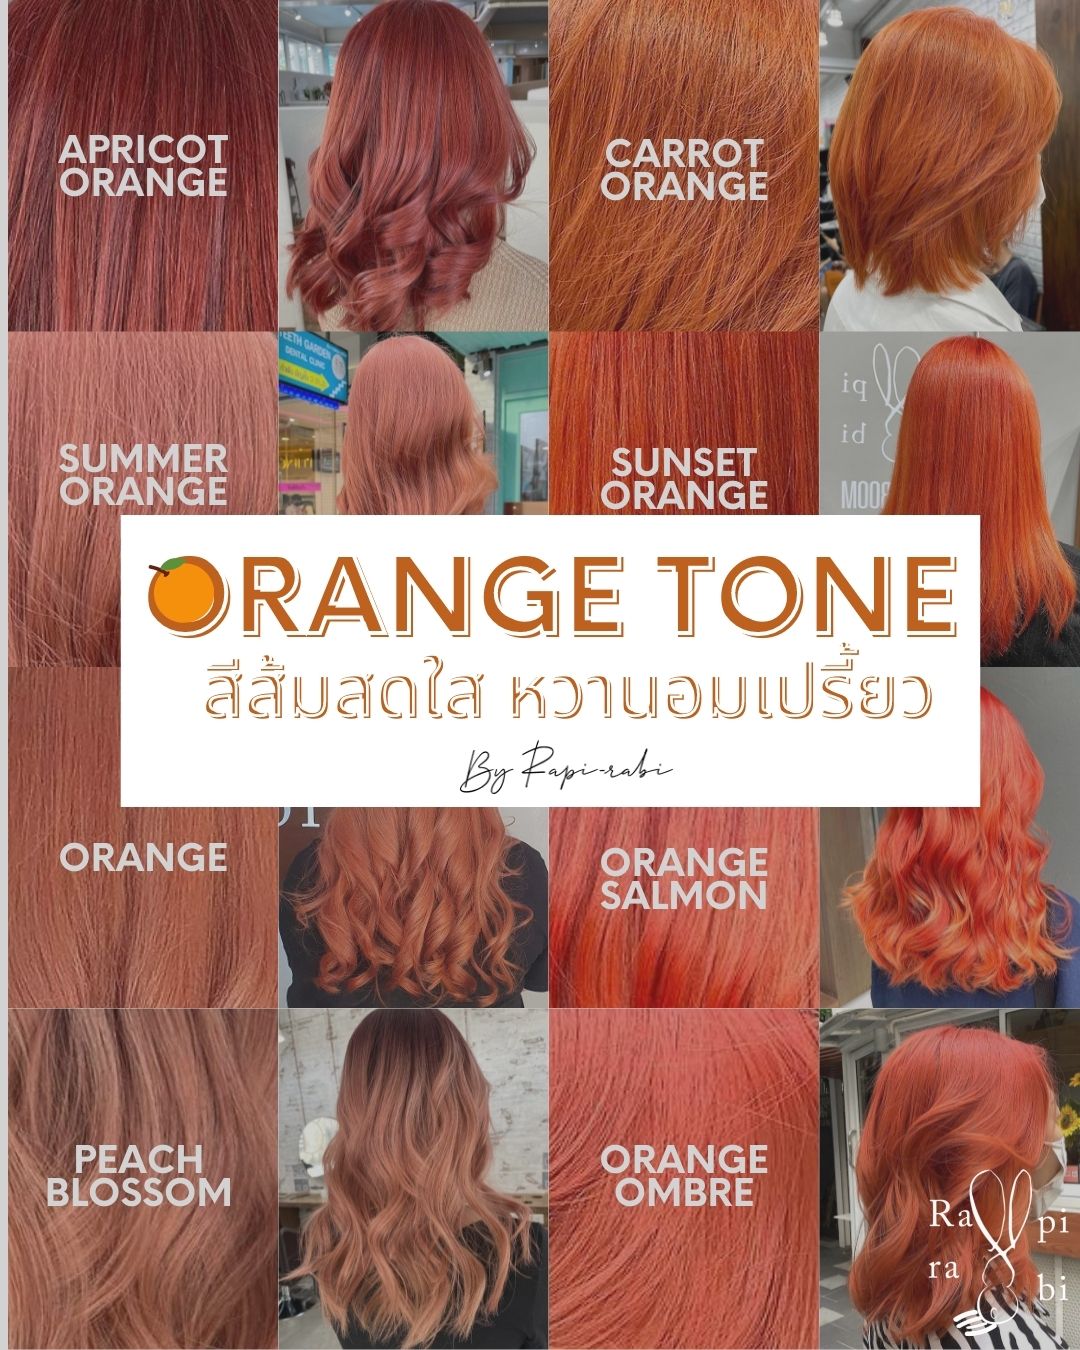 (TH) Orange tone สีส้มสดใส หวานอมเปรี้ยว By Rapi-rabi